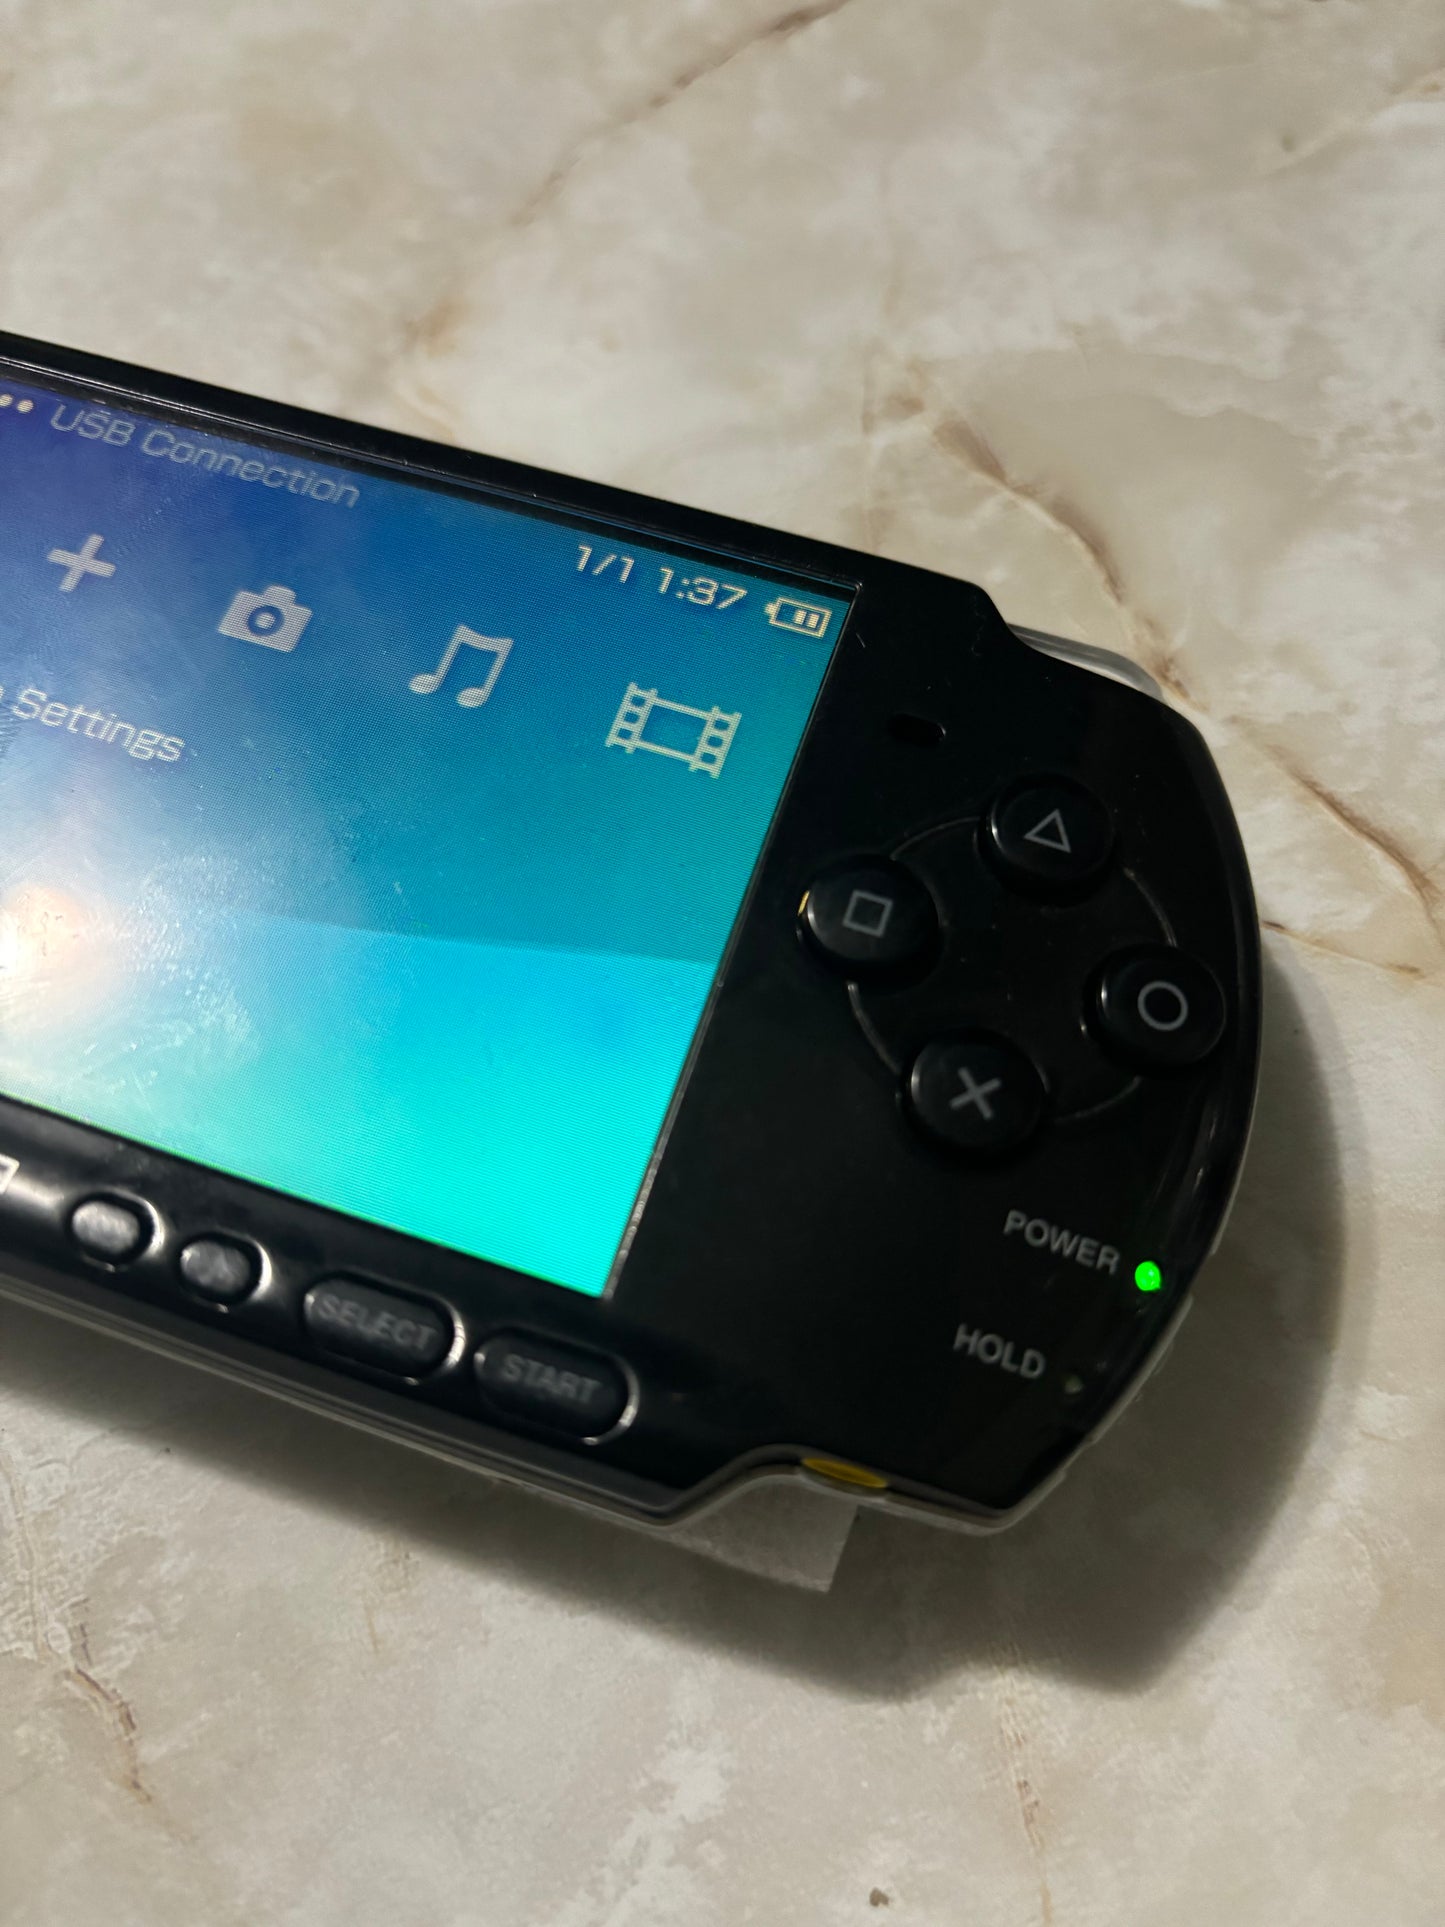 Sony PSP 3000  Black Console 128GB